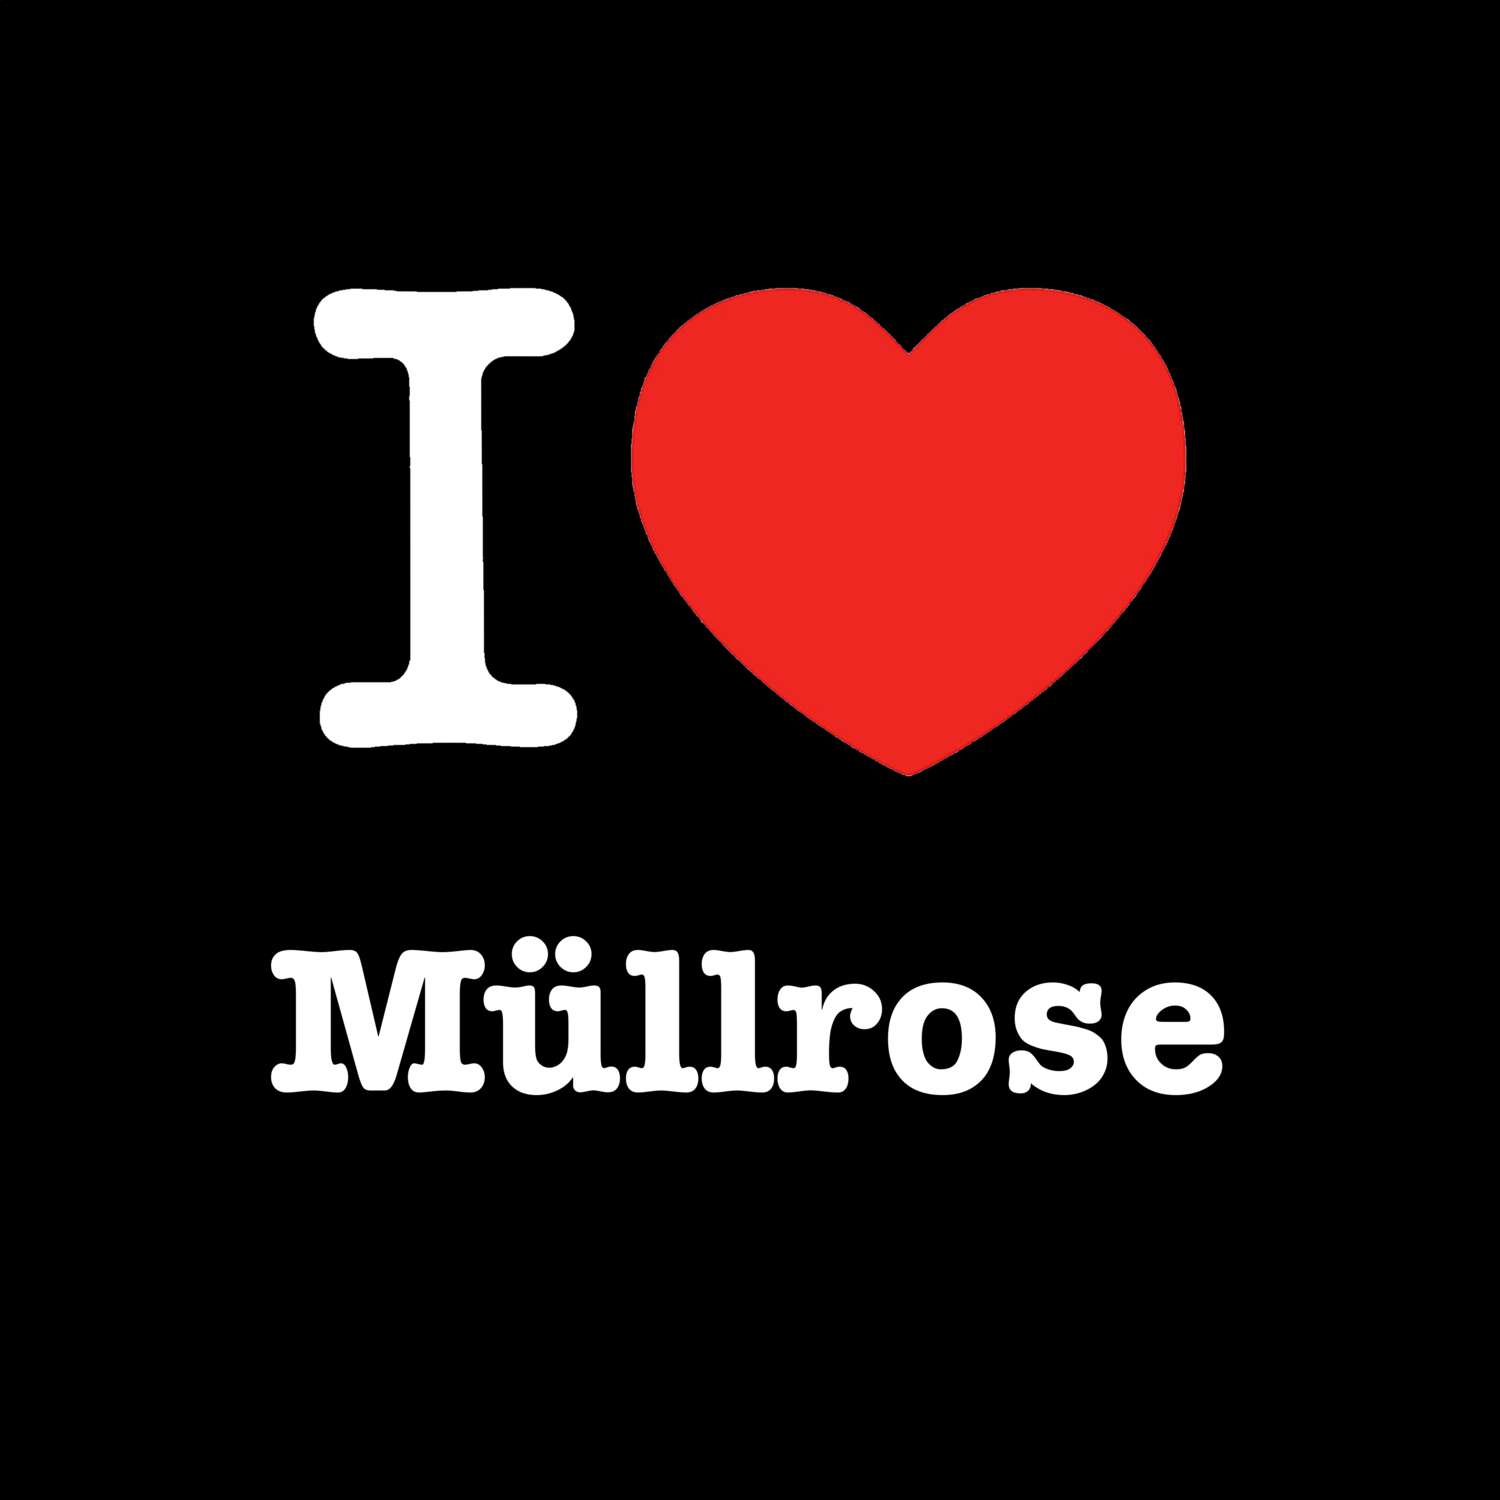 Müllrose T-Shirt »I love«